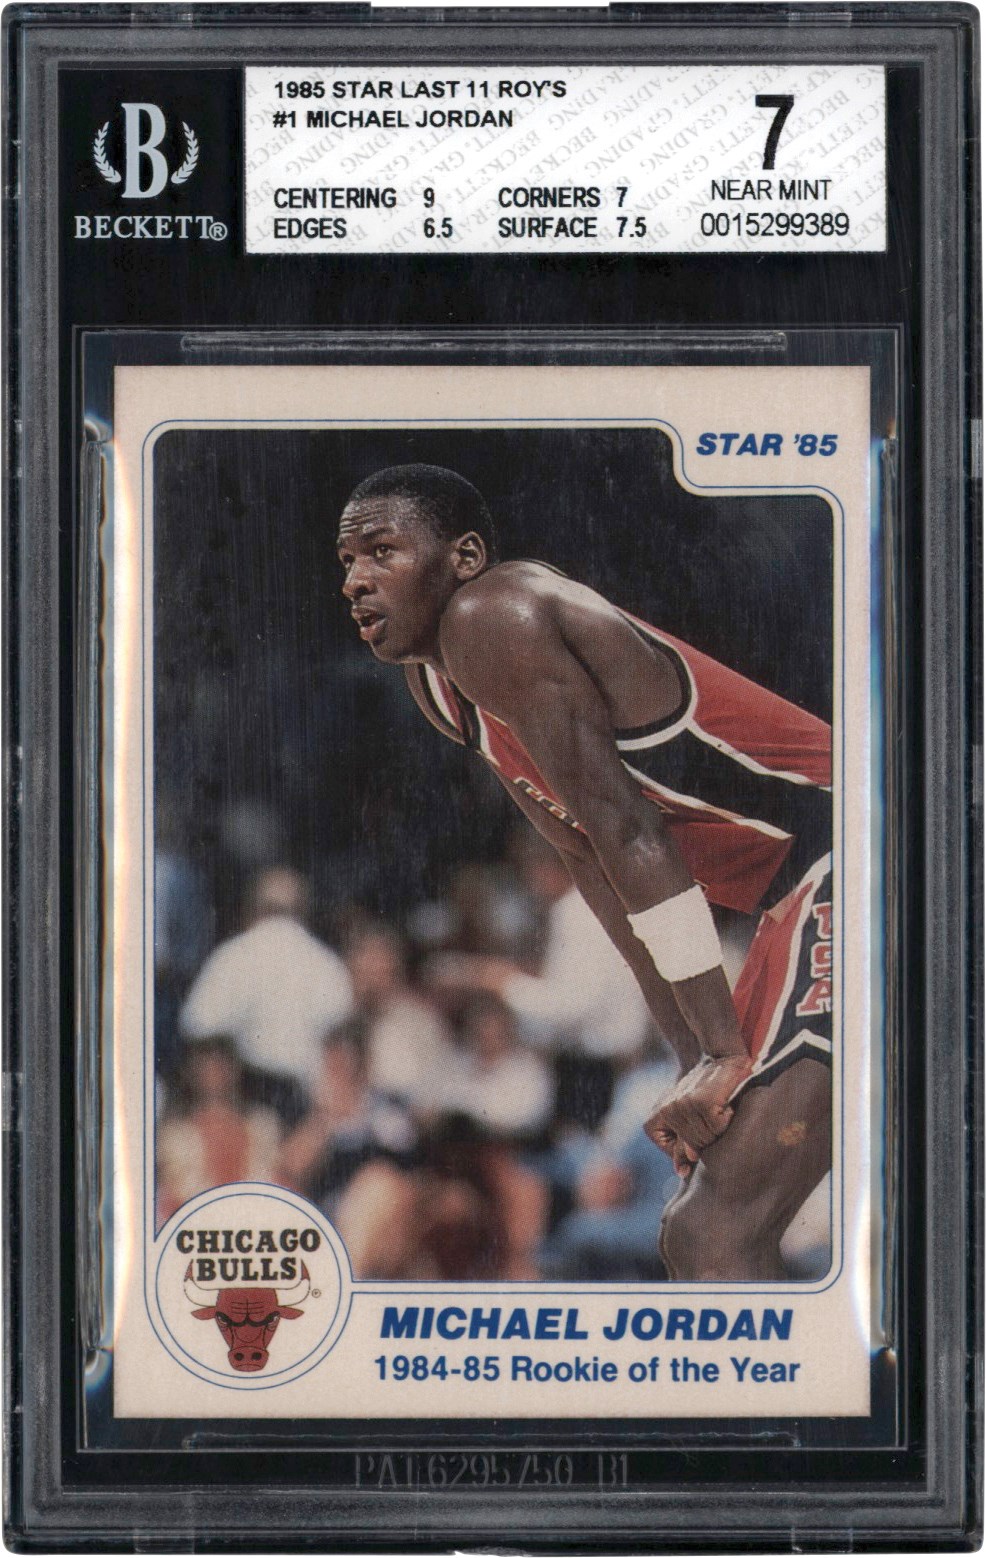 - 1985 Star Basketball Last 11 ROYs #1 Michael Jordan BGS NM 7